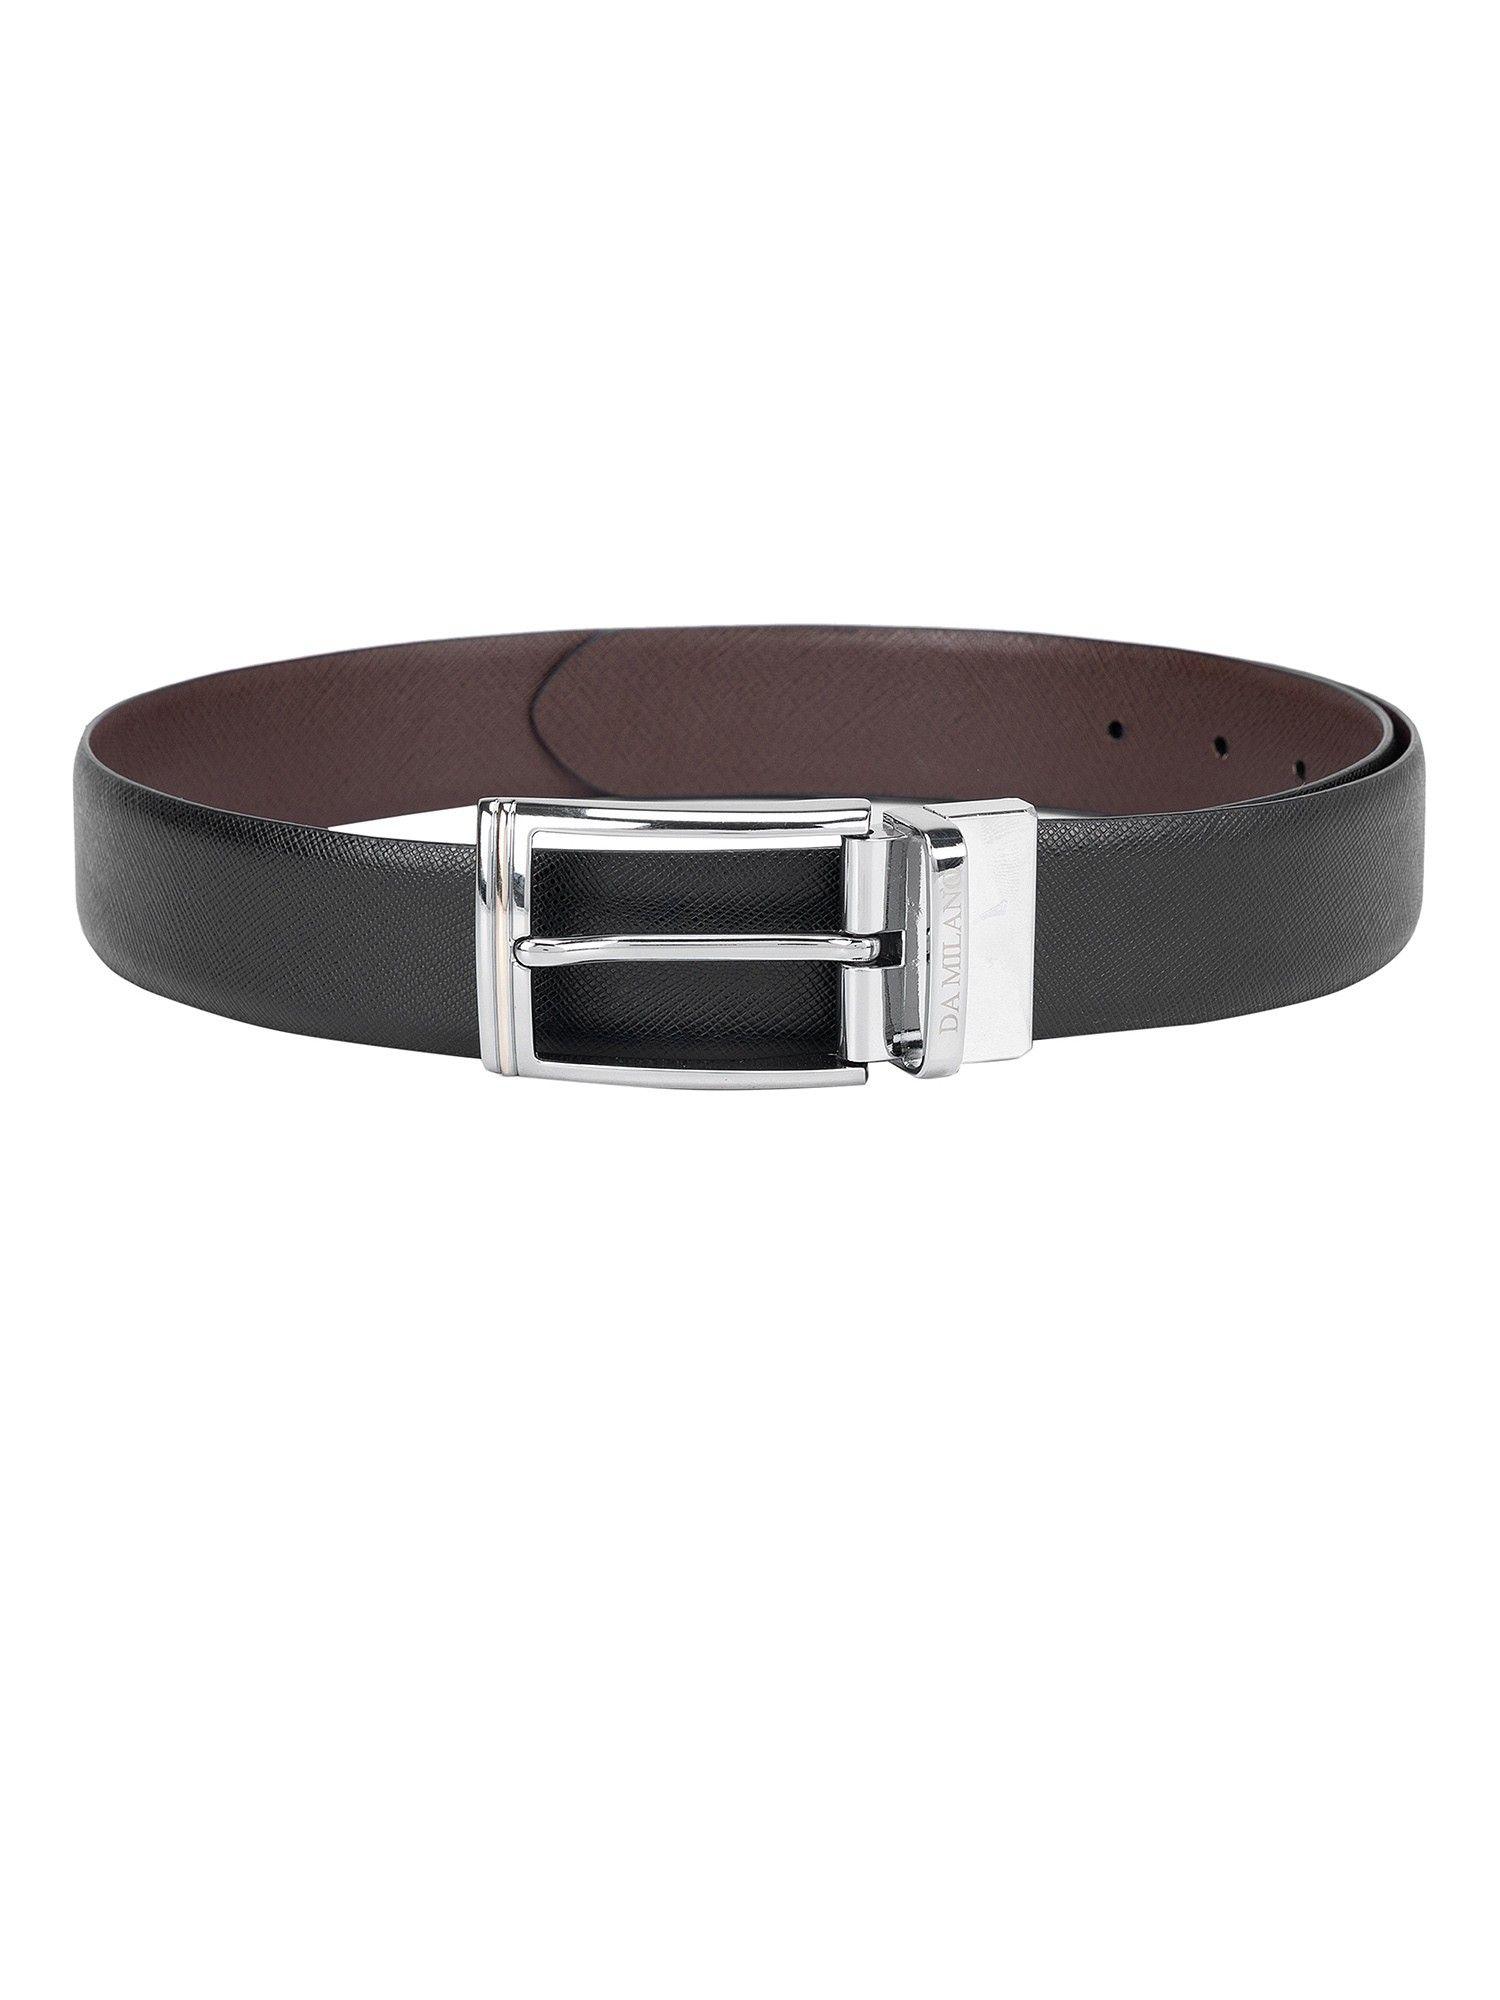 genuine leather black & brown reversible belt bm-3246-35r-olsaffiano